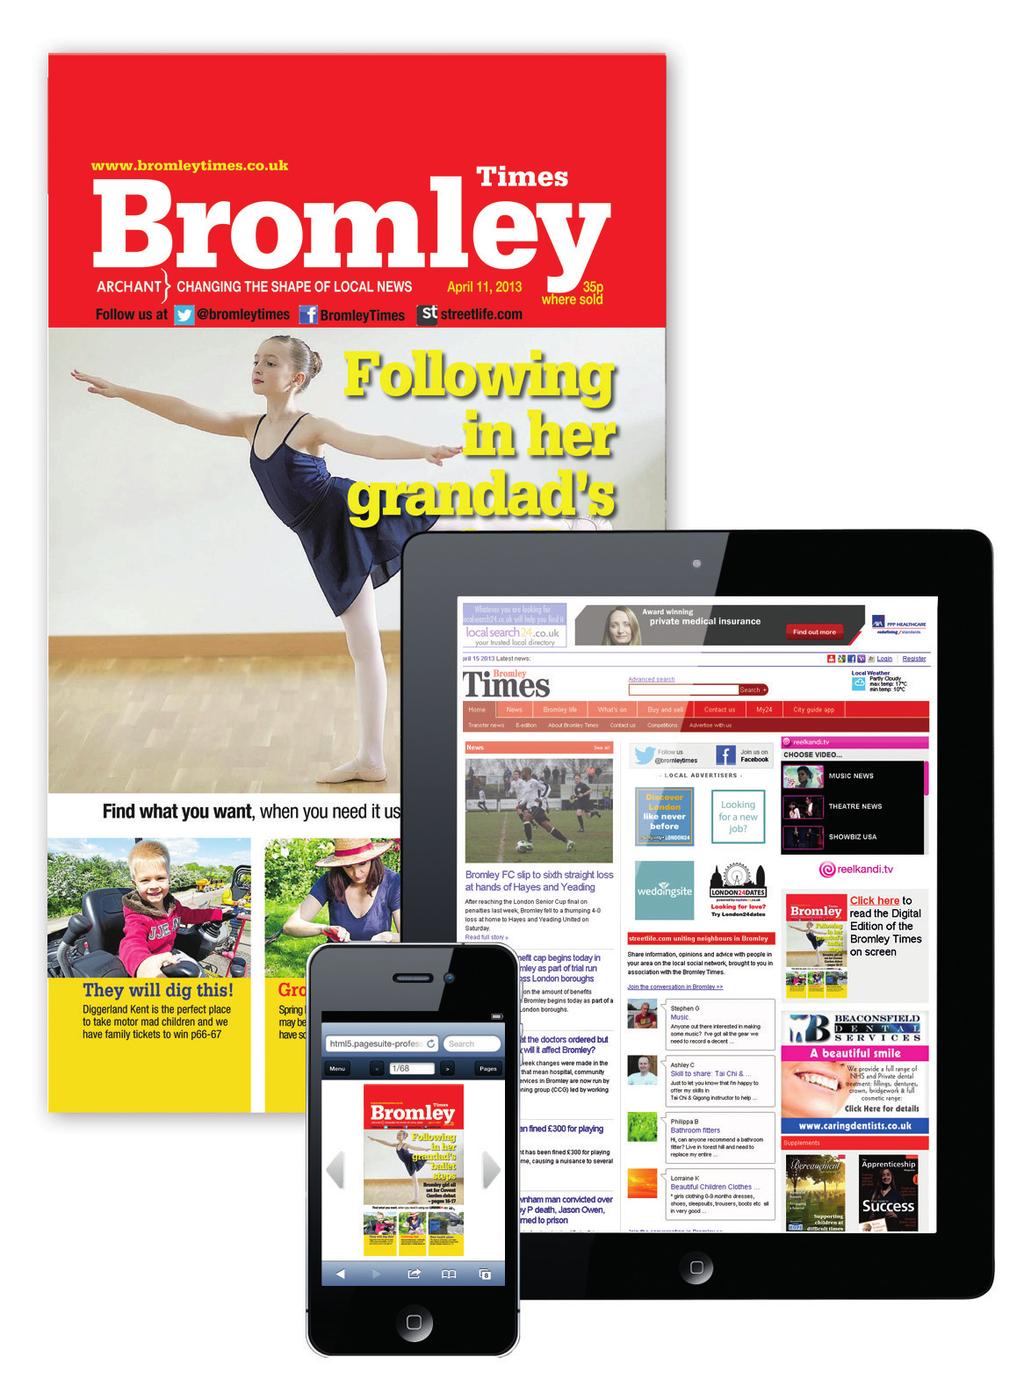 BROMLEY TIMES www.bromleytimes.co.uk WEBSITE E-EDITION 86,214 4,019 240 Adult wkly reach Av.